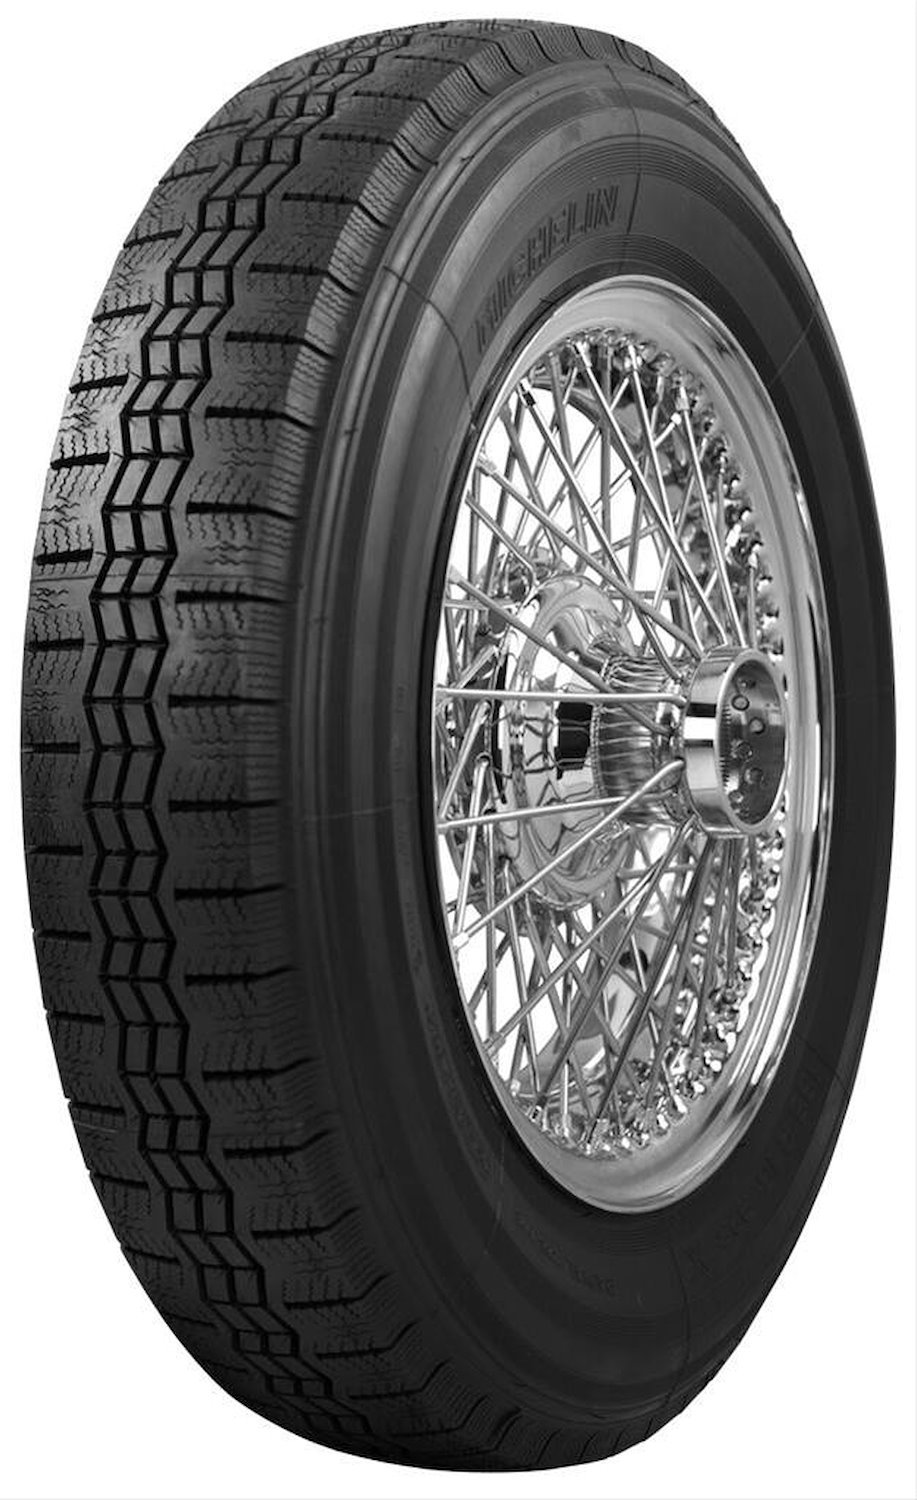 66250 Tire, Michelin X Radial, 185R16 92S